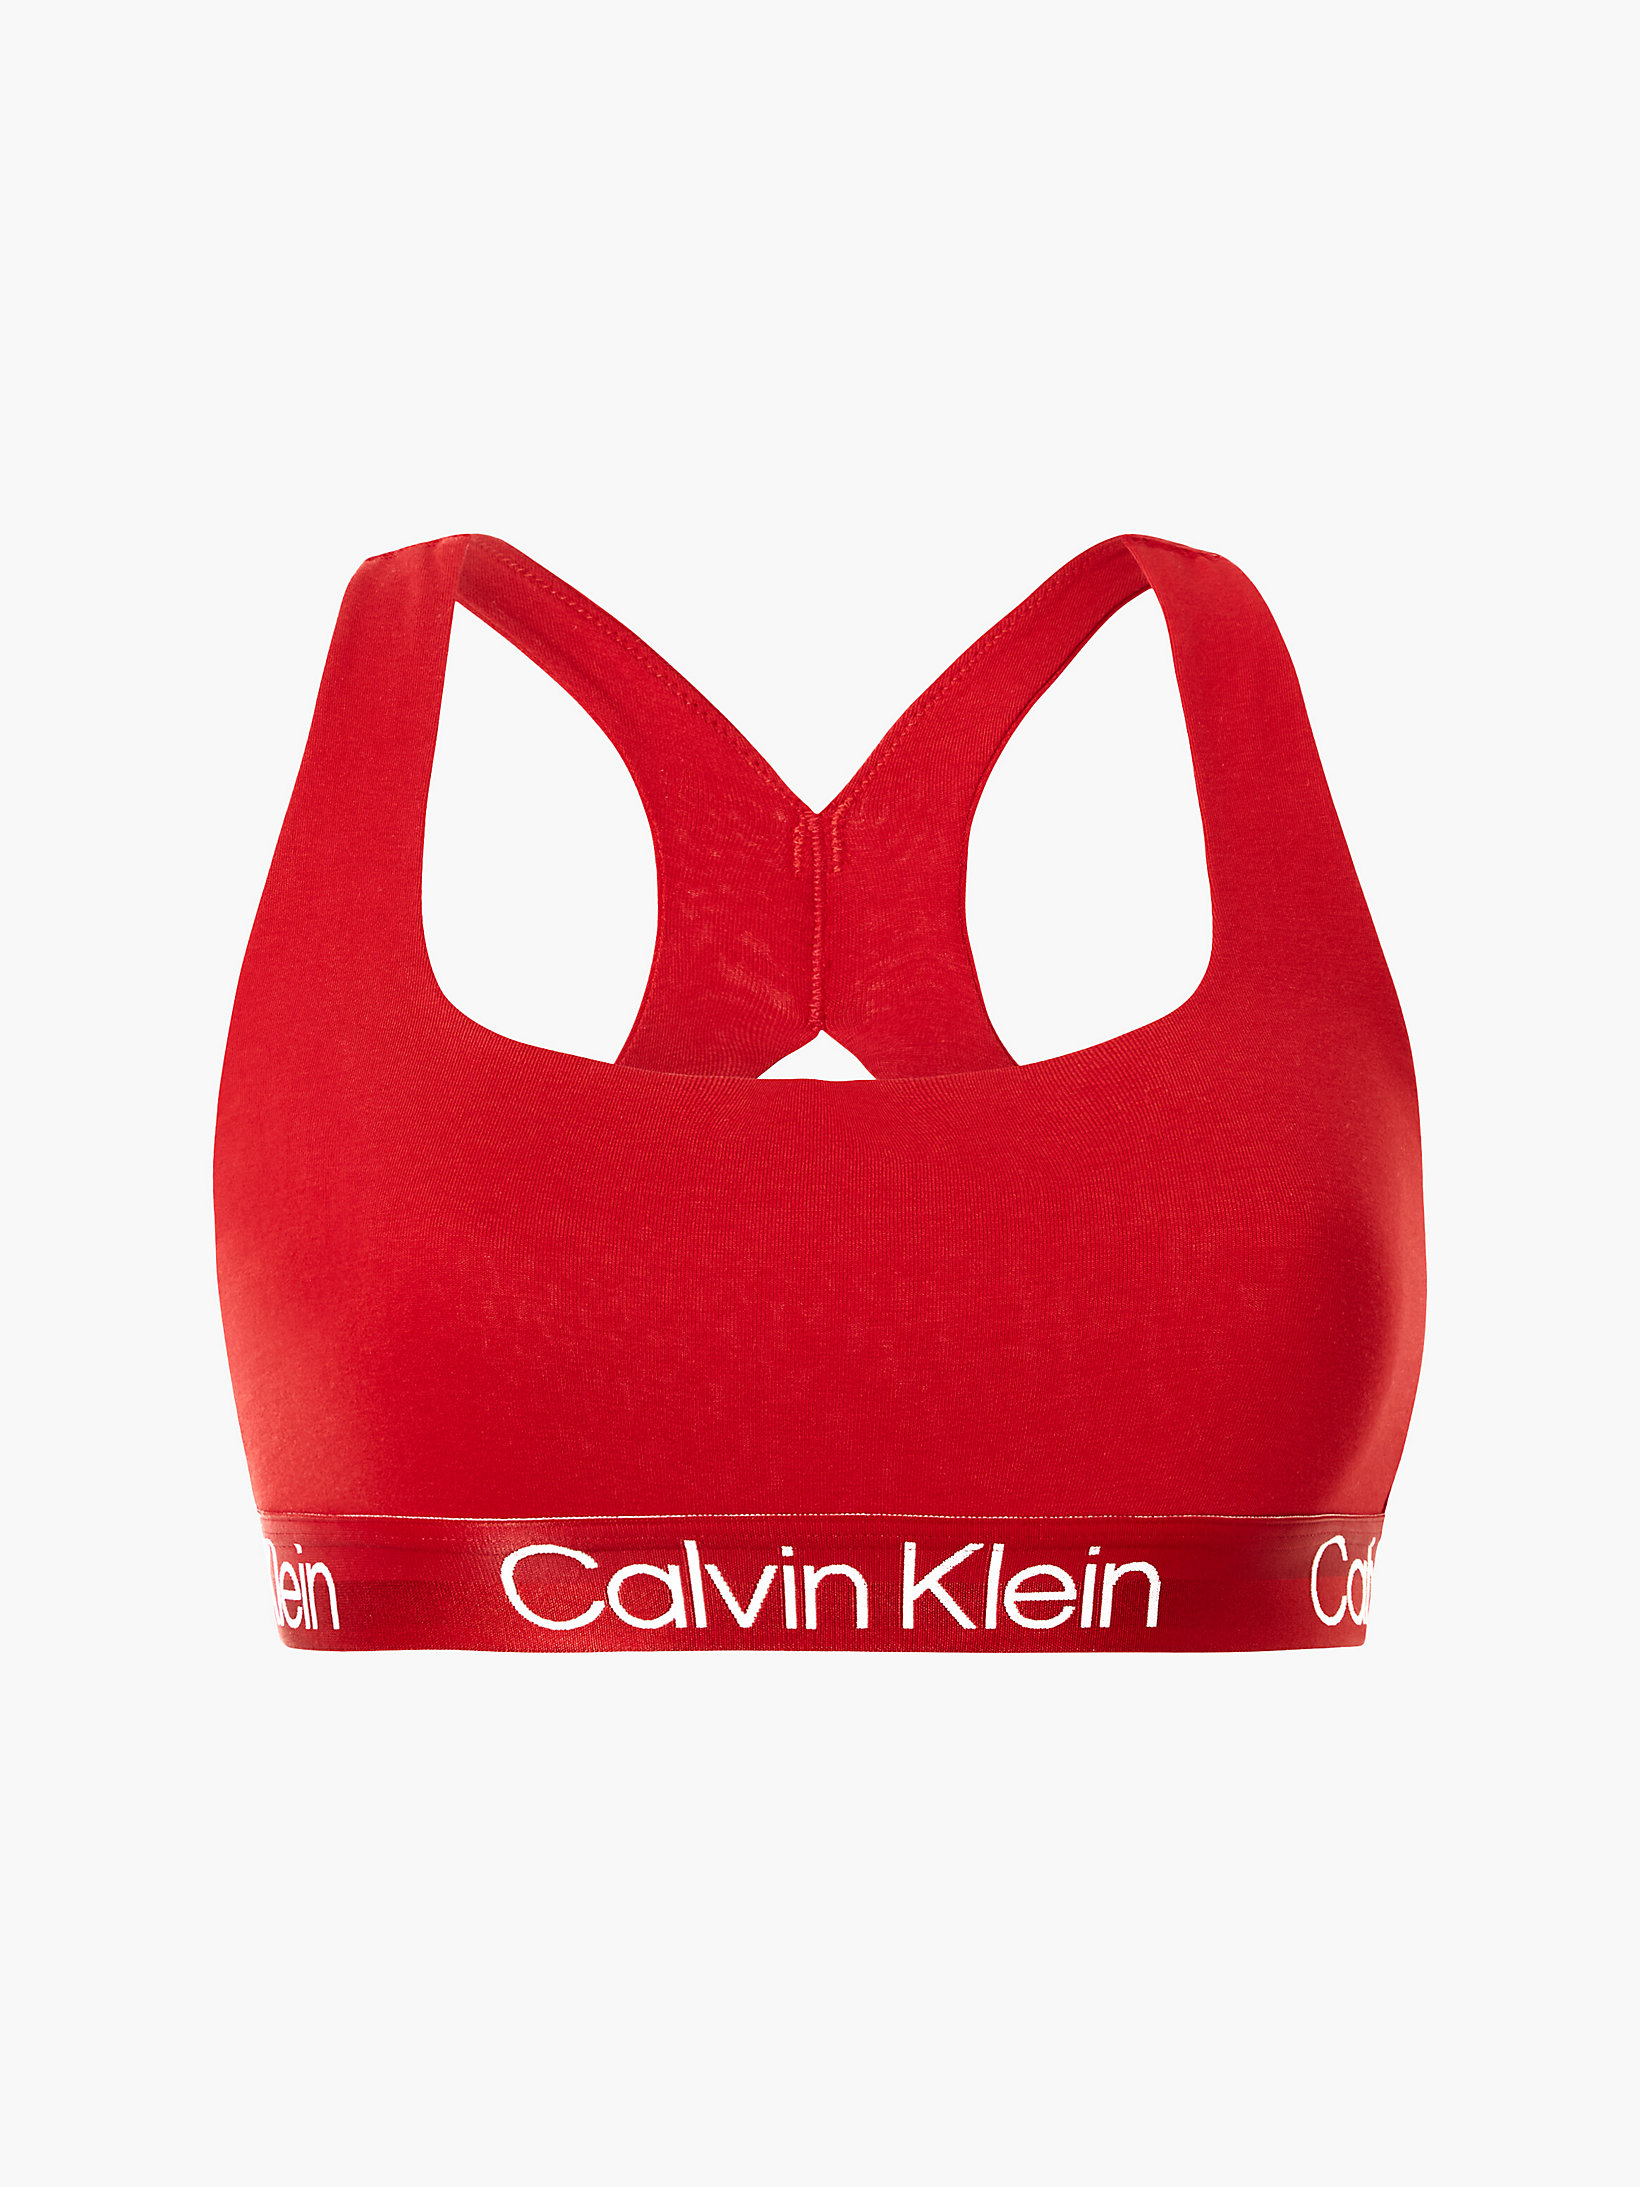 Brassière - Modern Structure > Rustic Red > undefined femmes > Calvin Klein